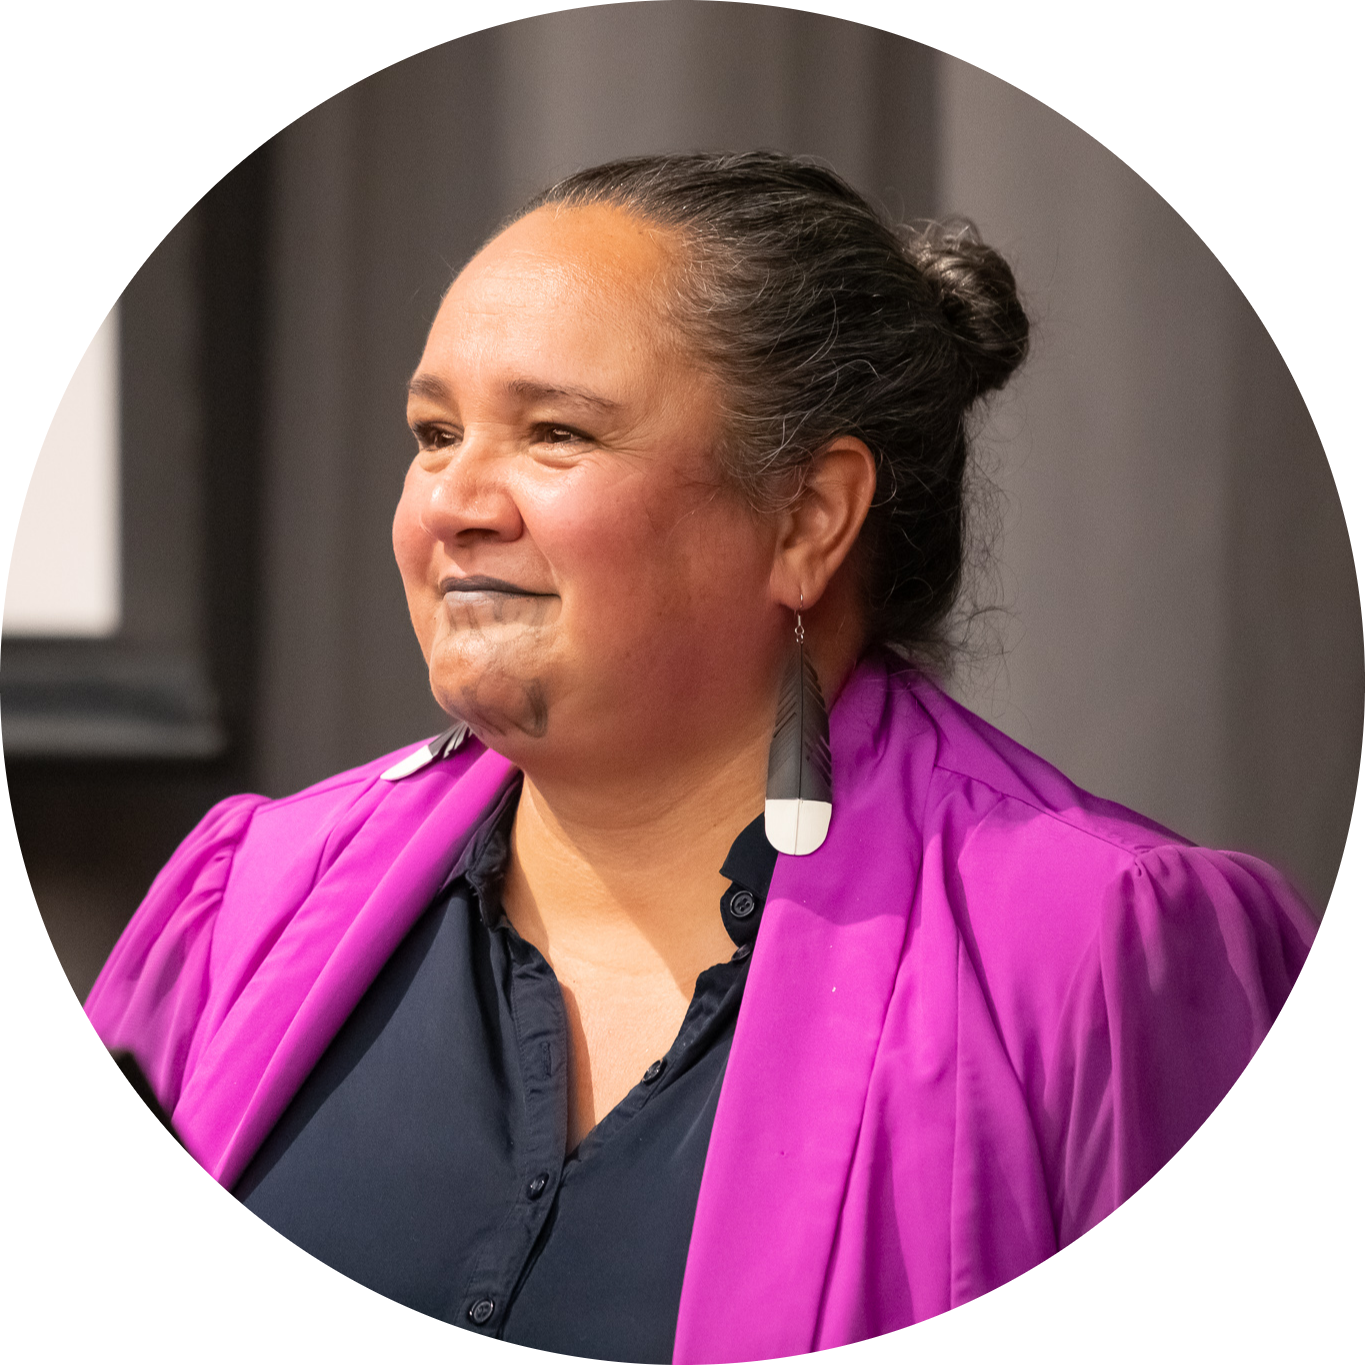 A portrait of a smiling Māori woman.